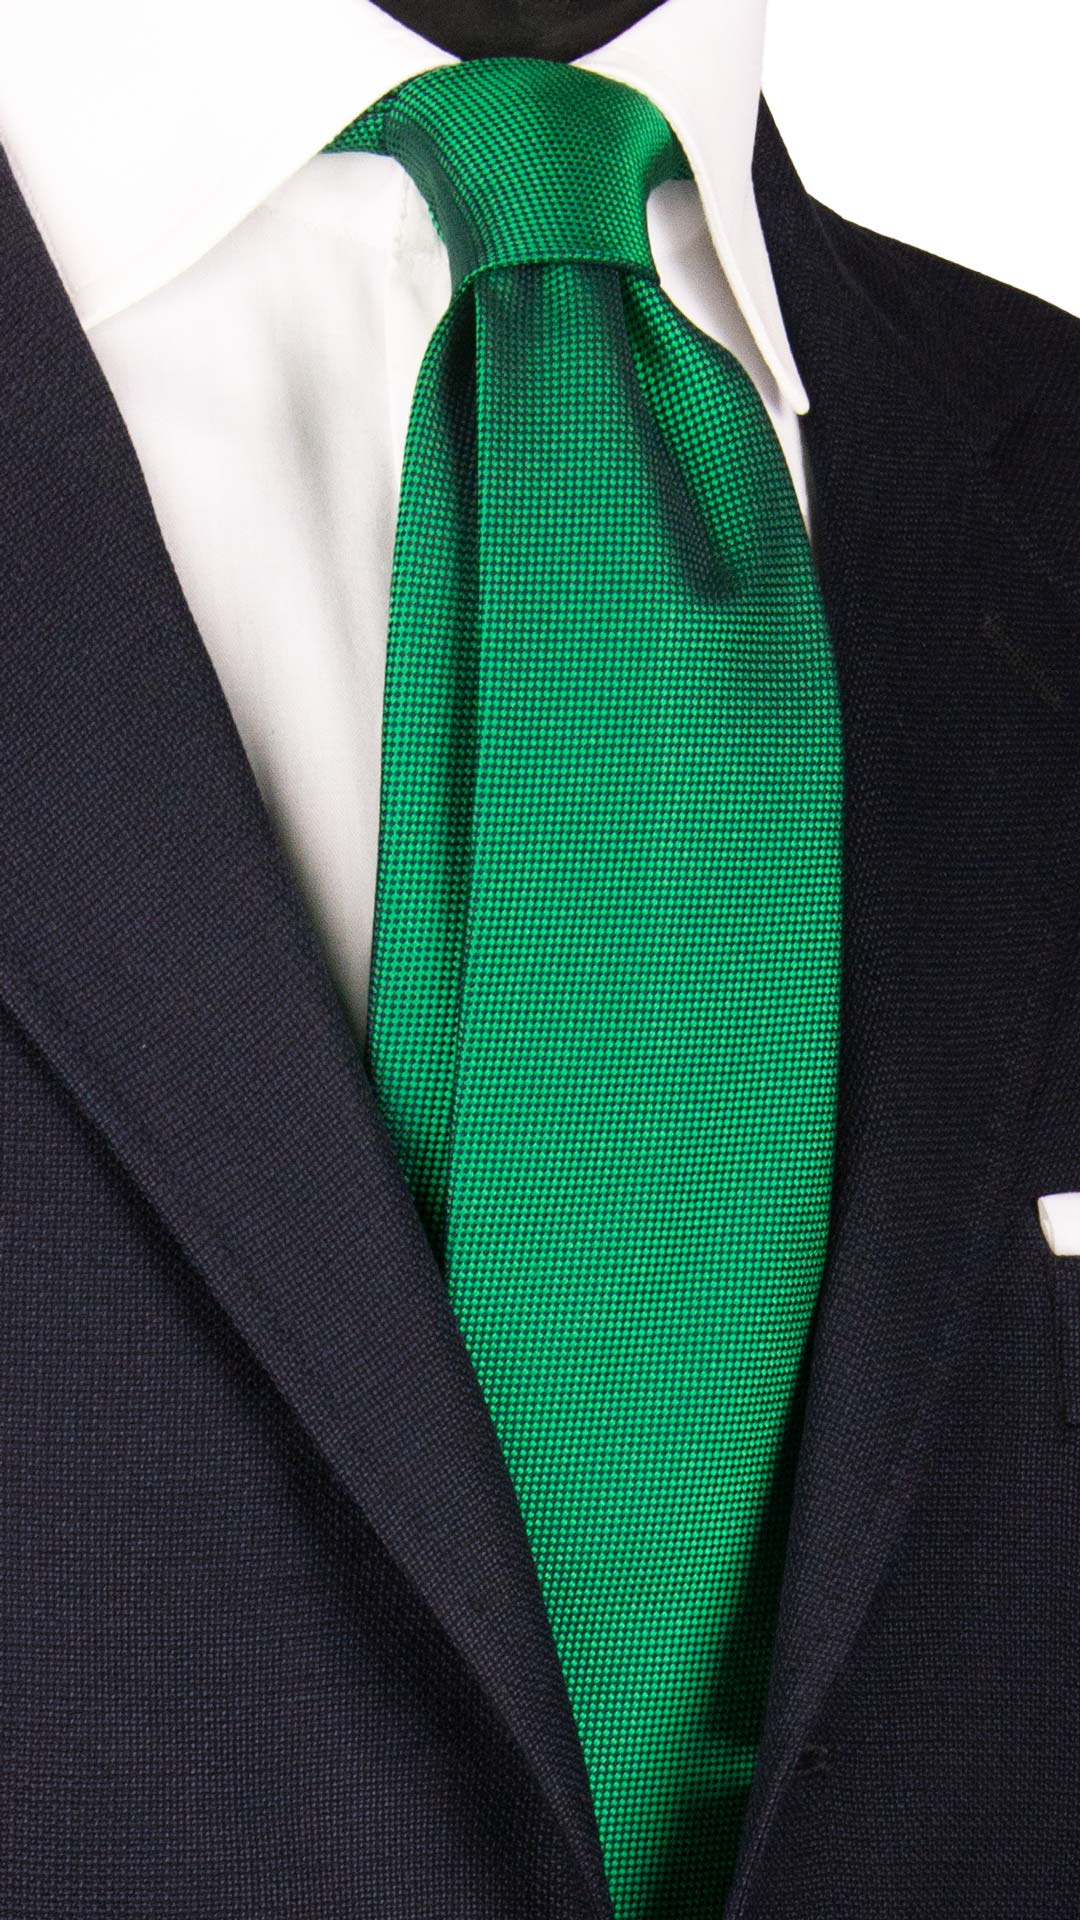 Cravatta di Seta Verde Tinta Unita 7032 Made in Italy Graffeo Cravatte